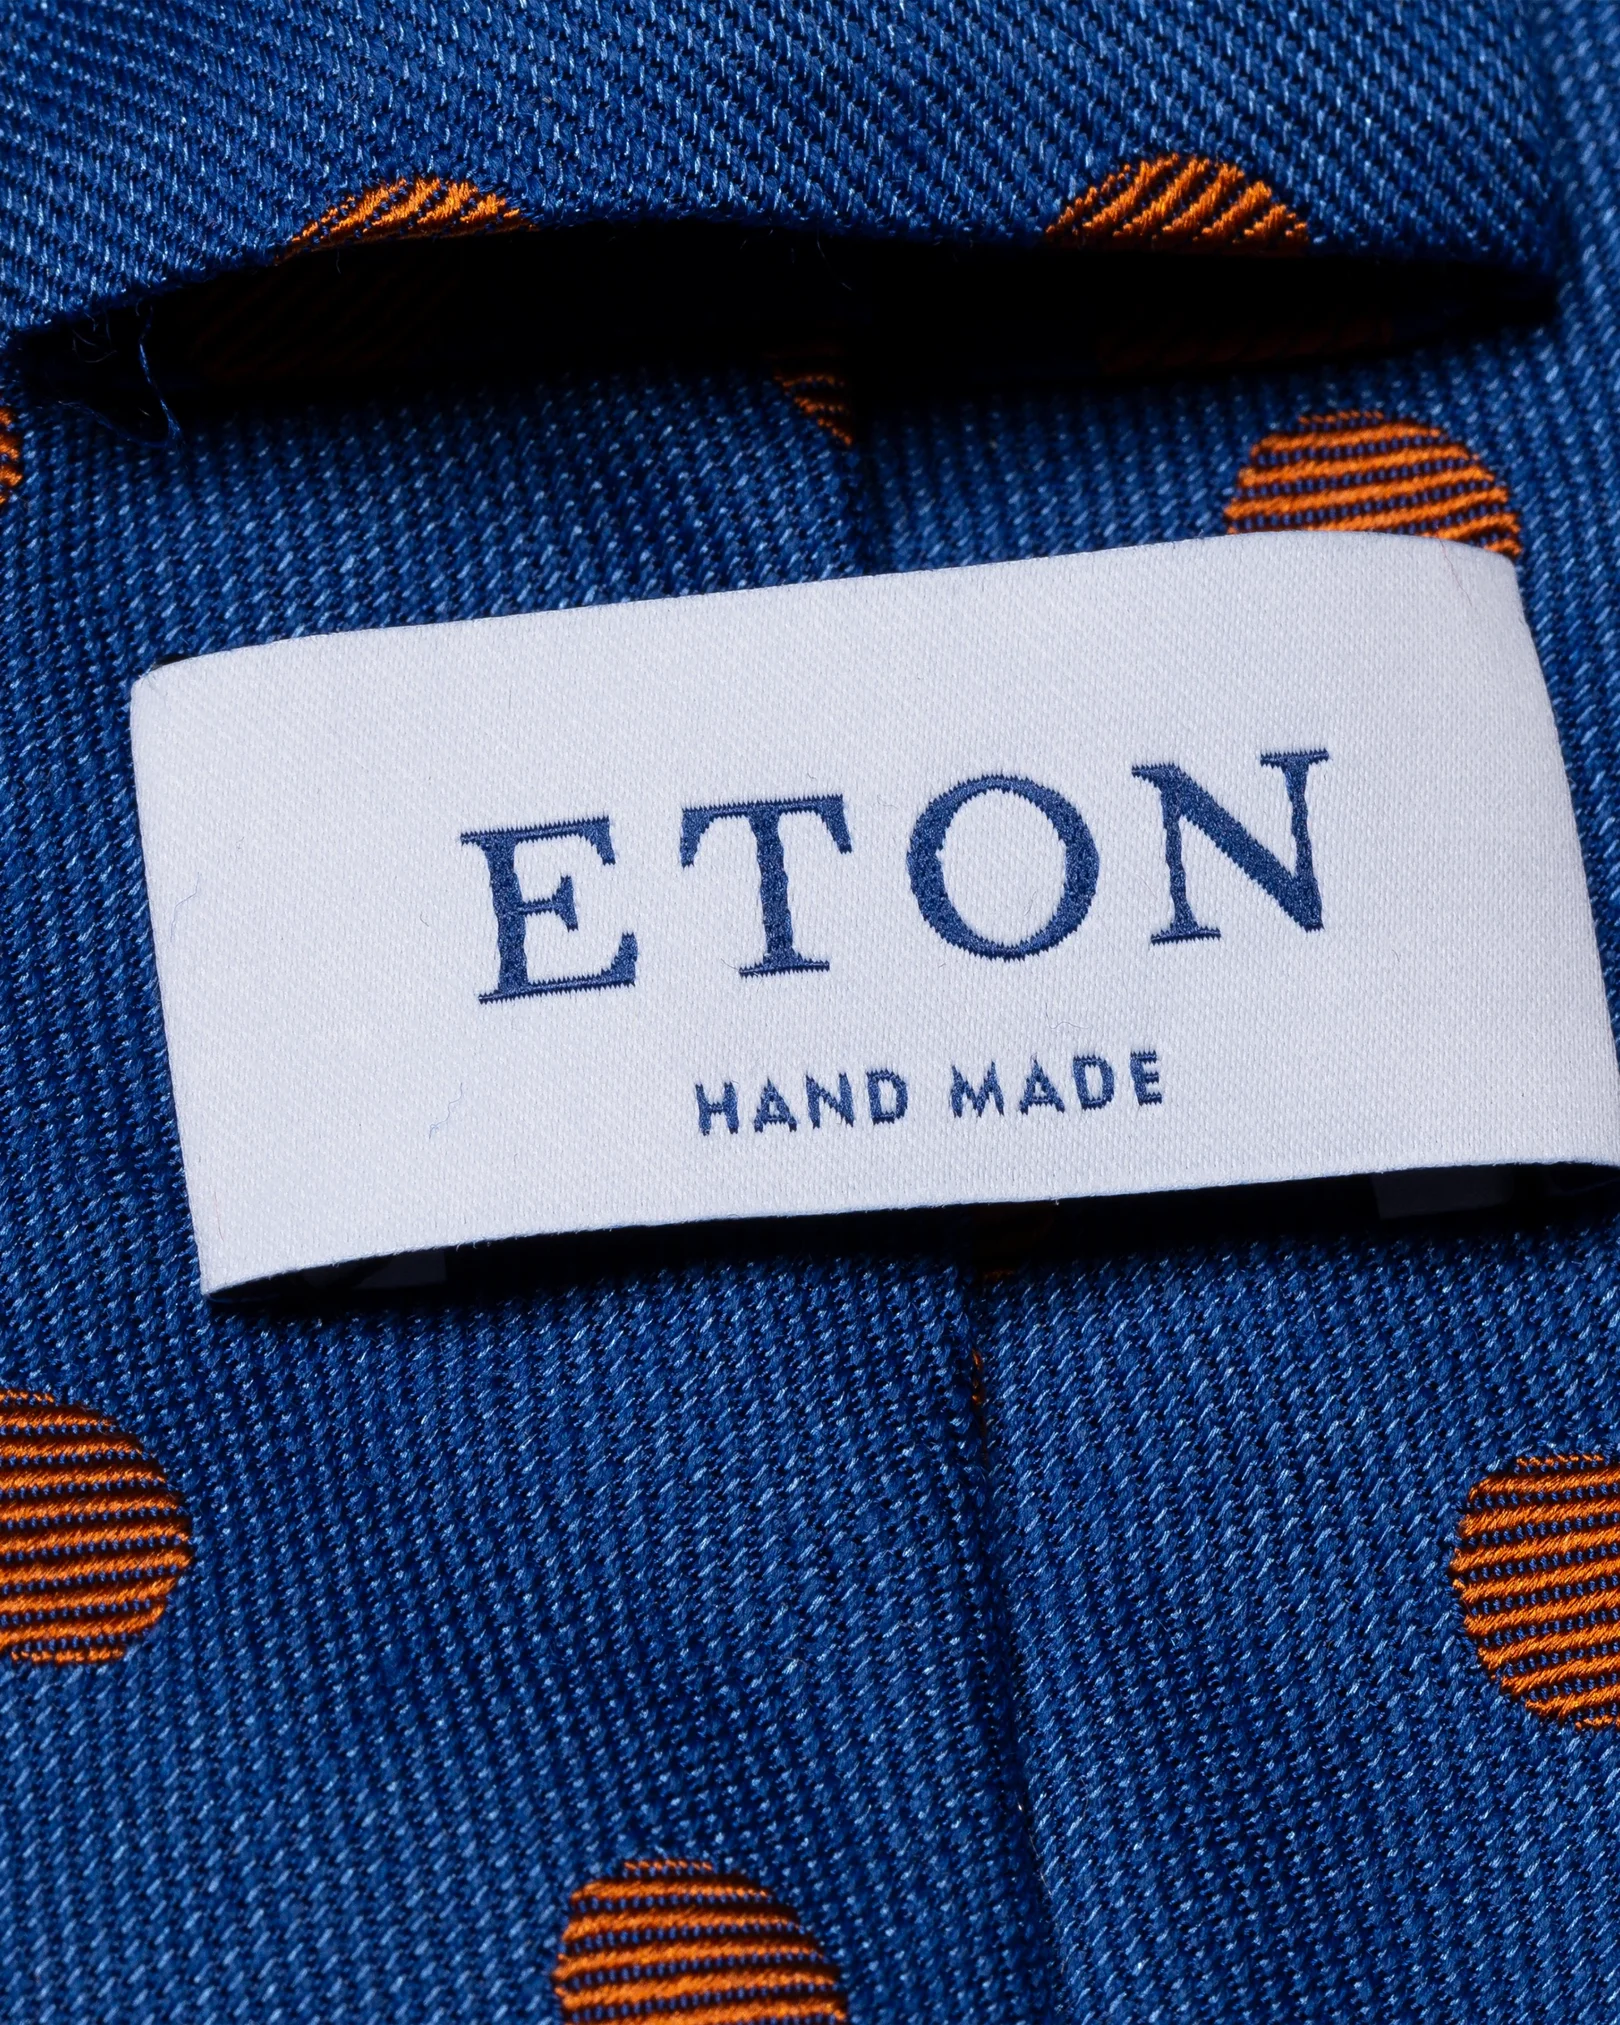 Eton - blue and yellow polka dot silk wool tie